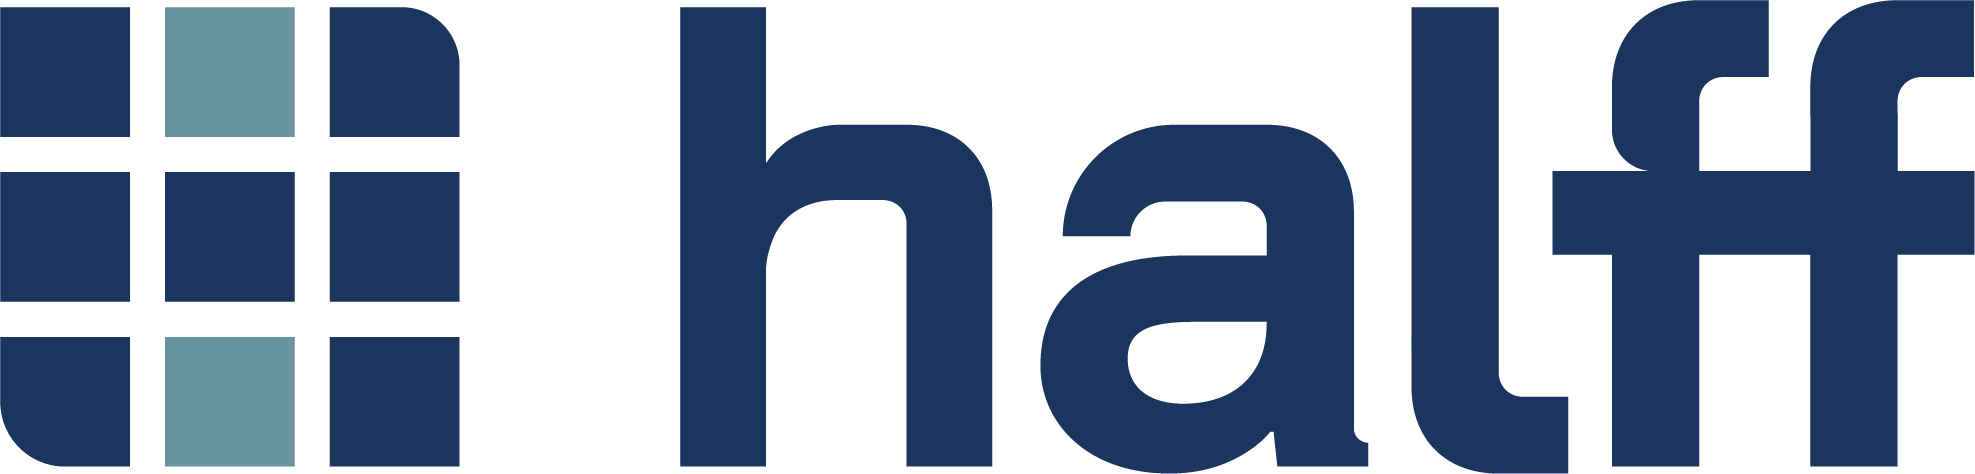 Halff Company Logo